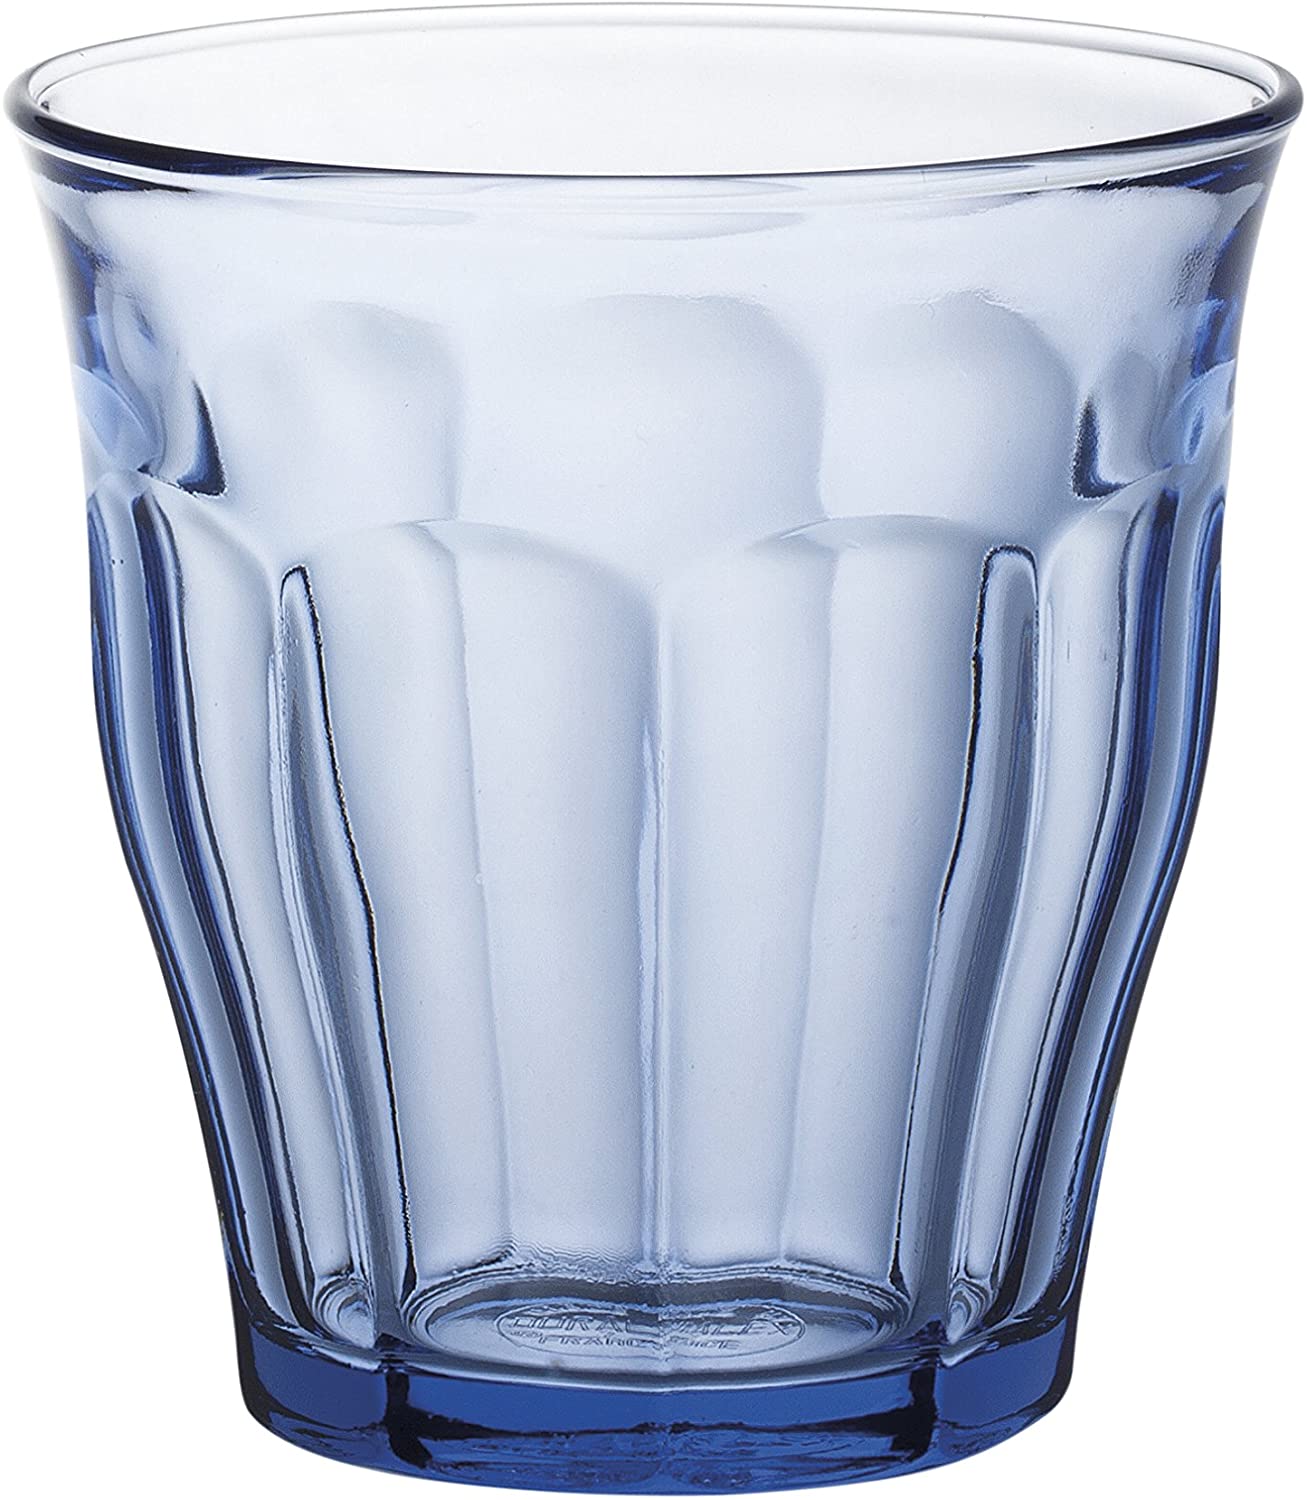 כוס זכוכית (6 יח) דורלקס דגם ...